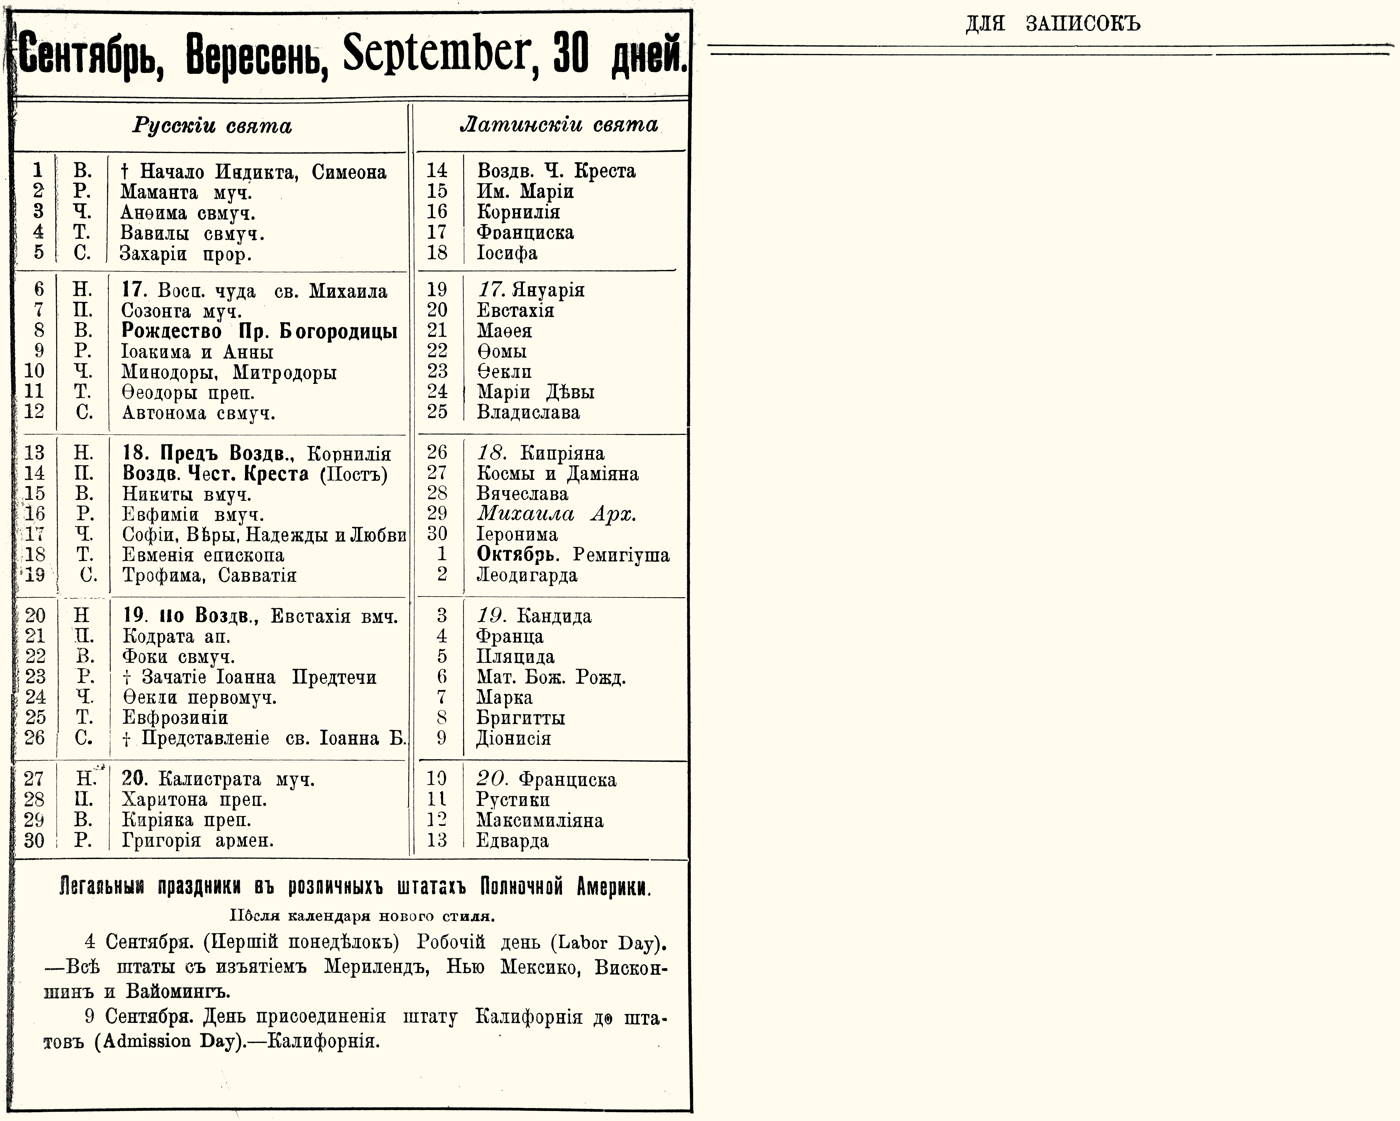 Orthodox Church Calendar, September 1915